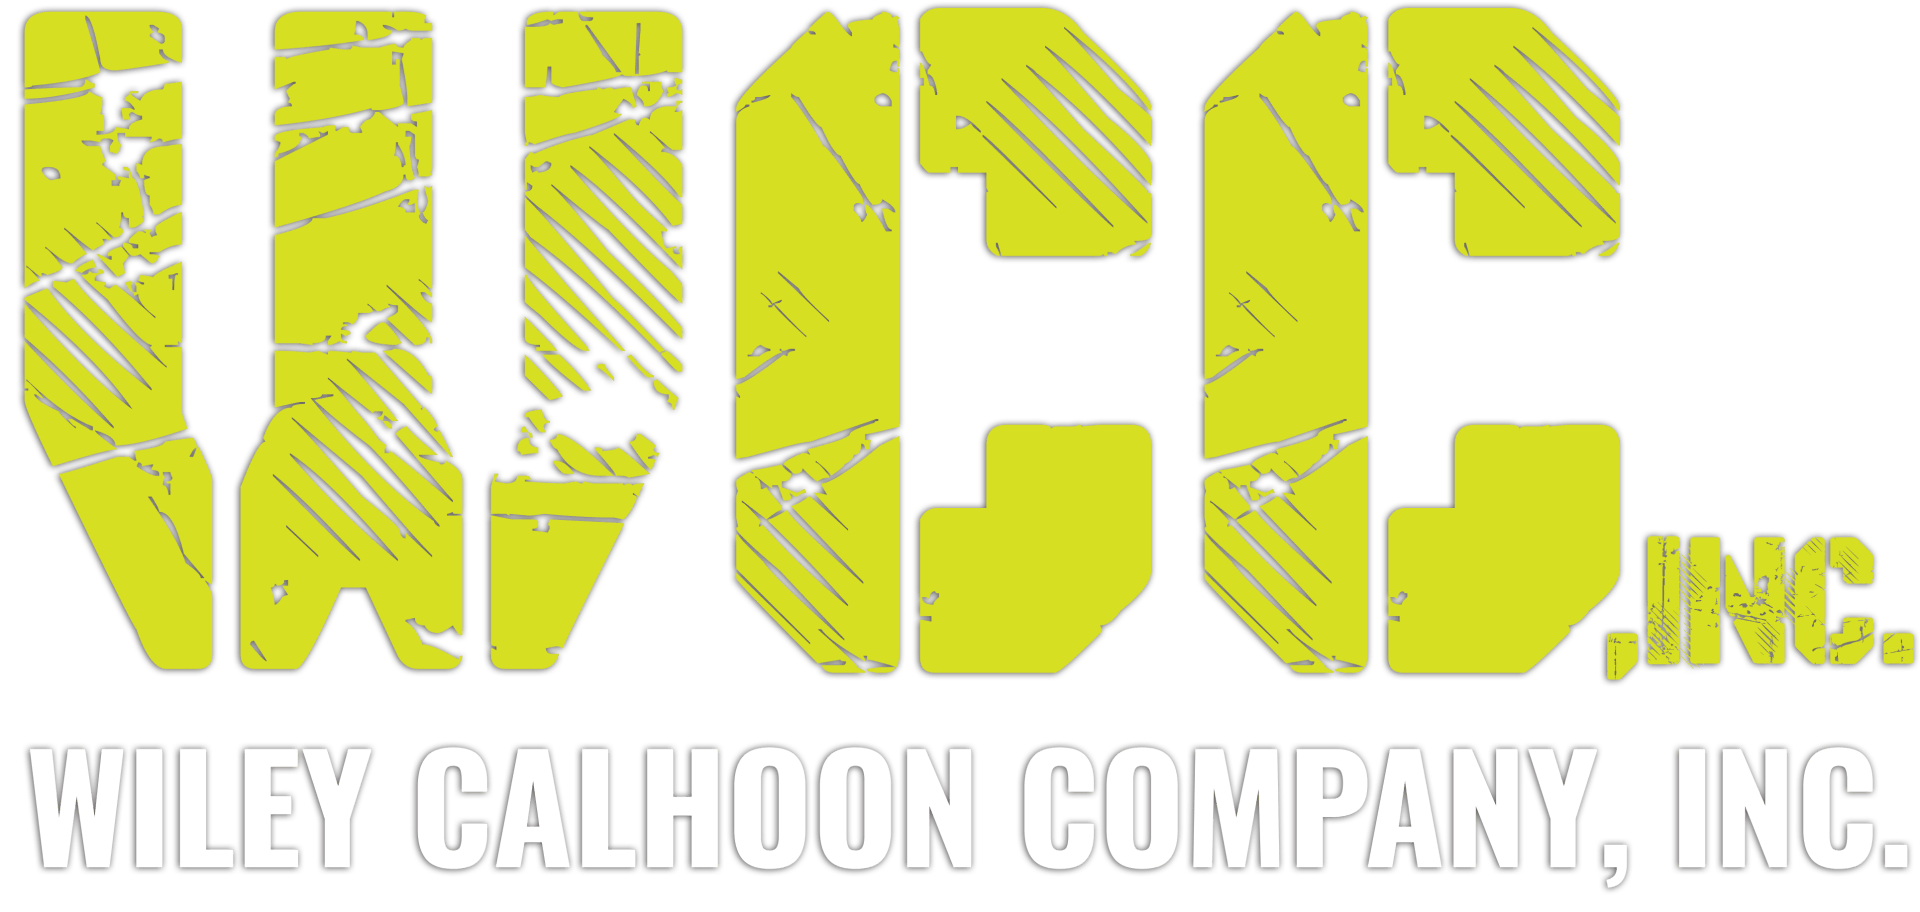 Wiley Calhoon Company, Inc in Texarkana, AR